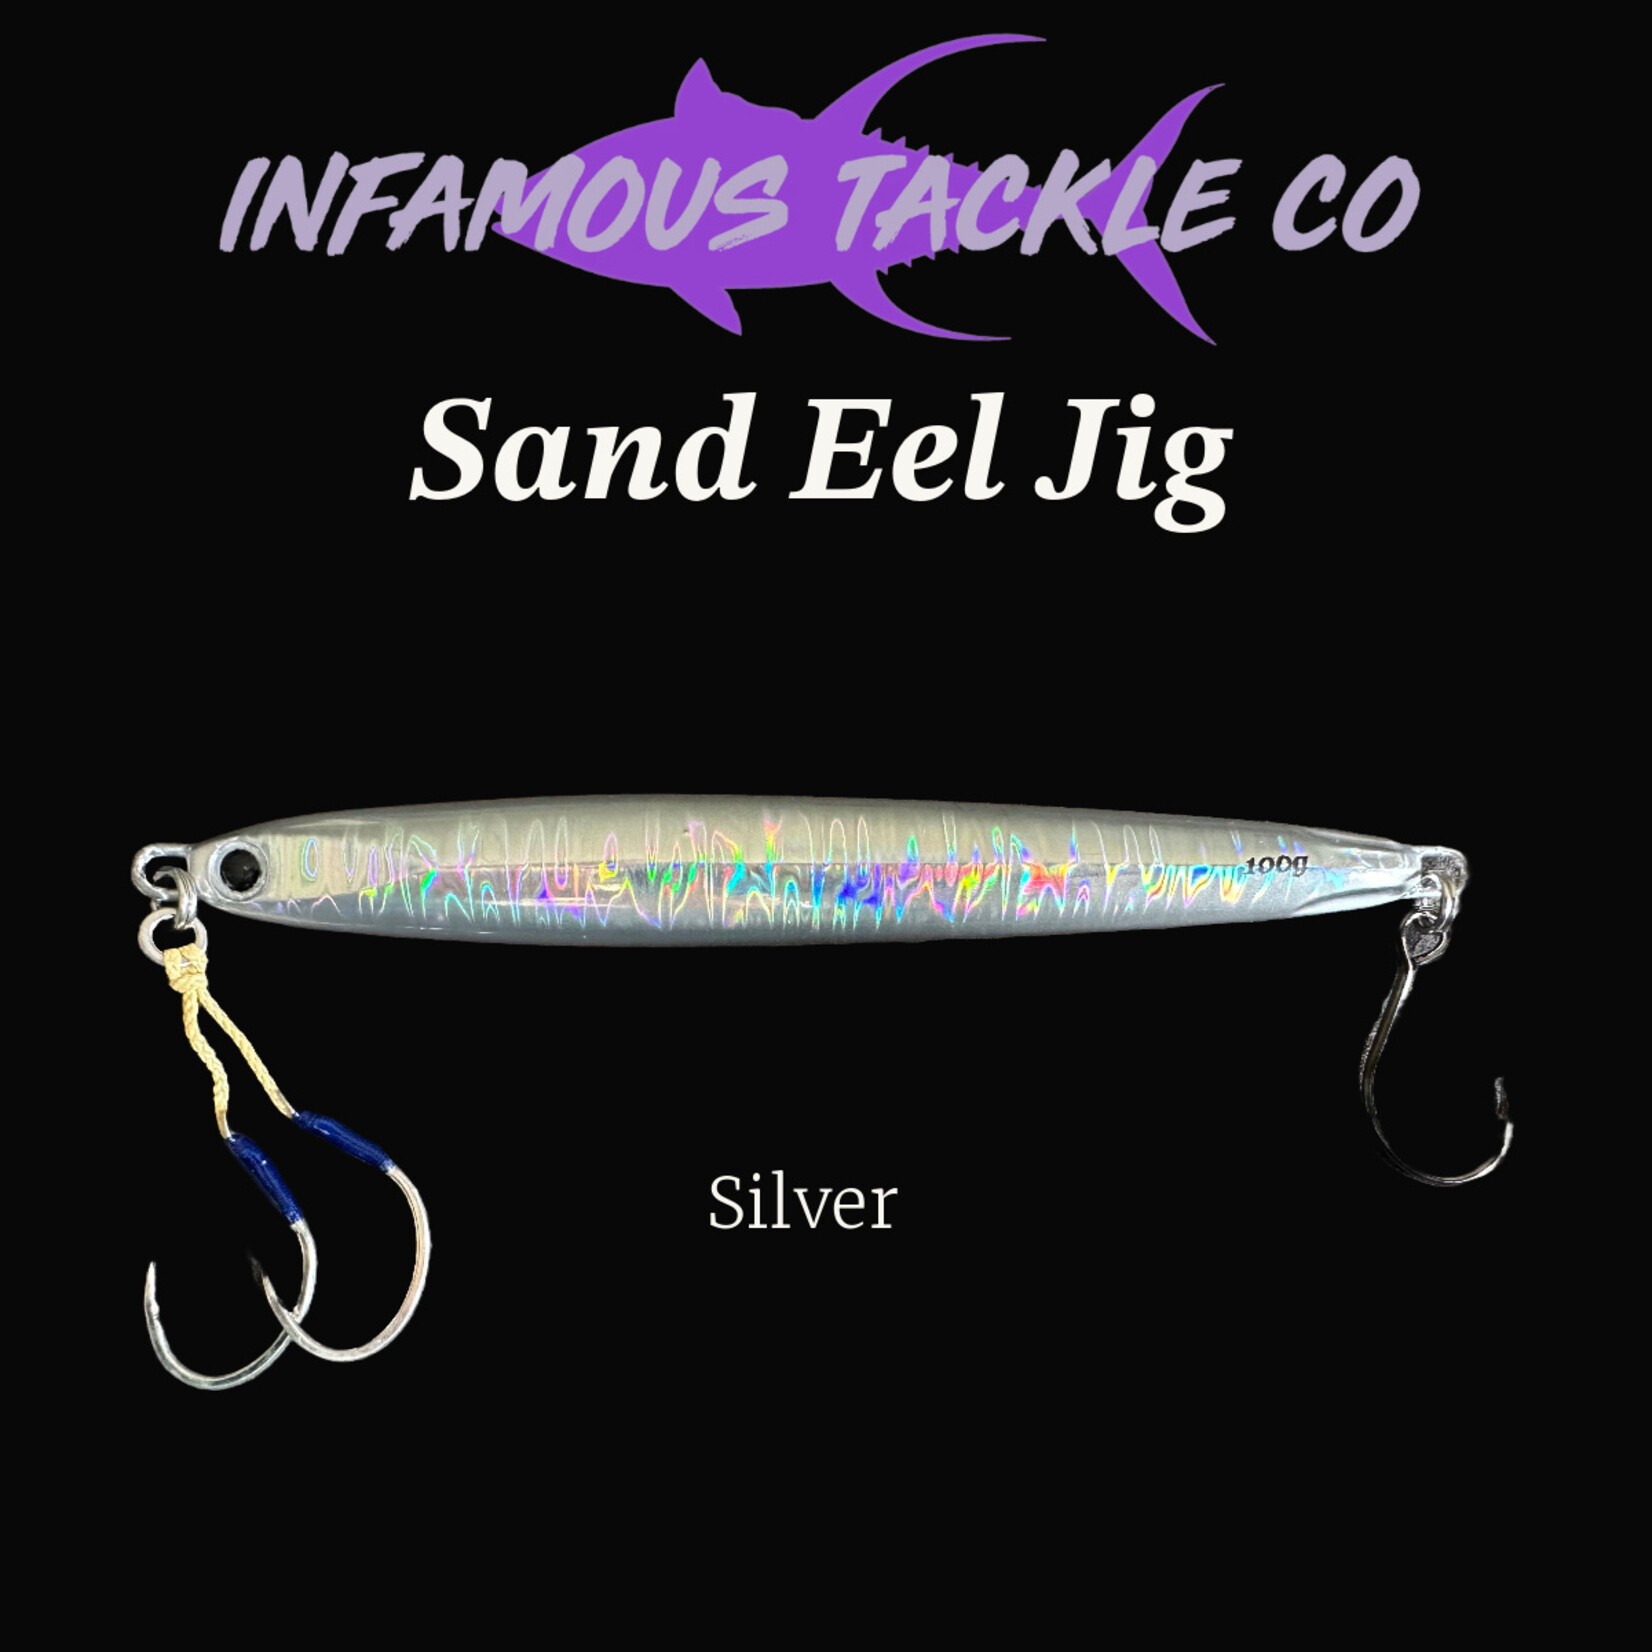 Infamous Tackle Co. Sand Eel Jig